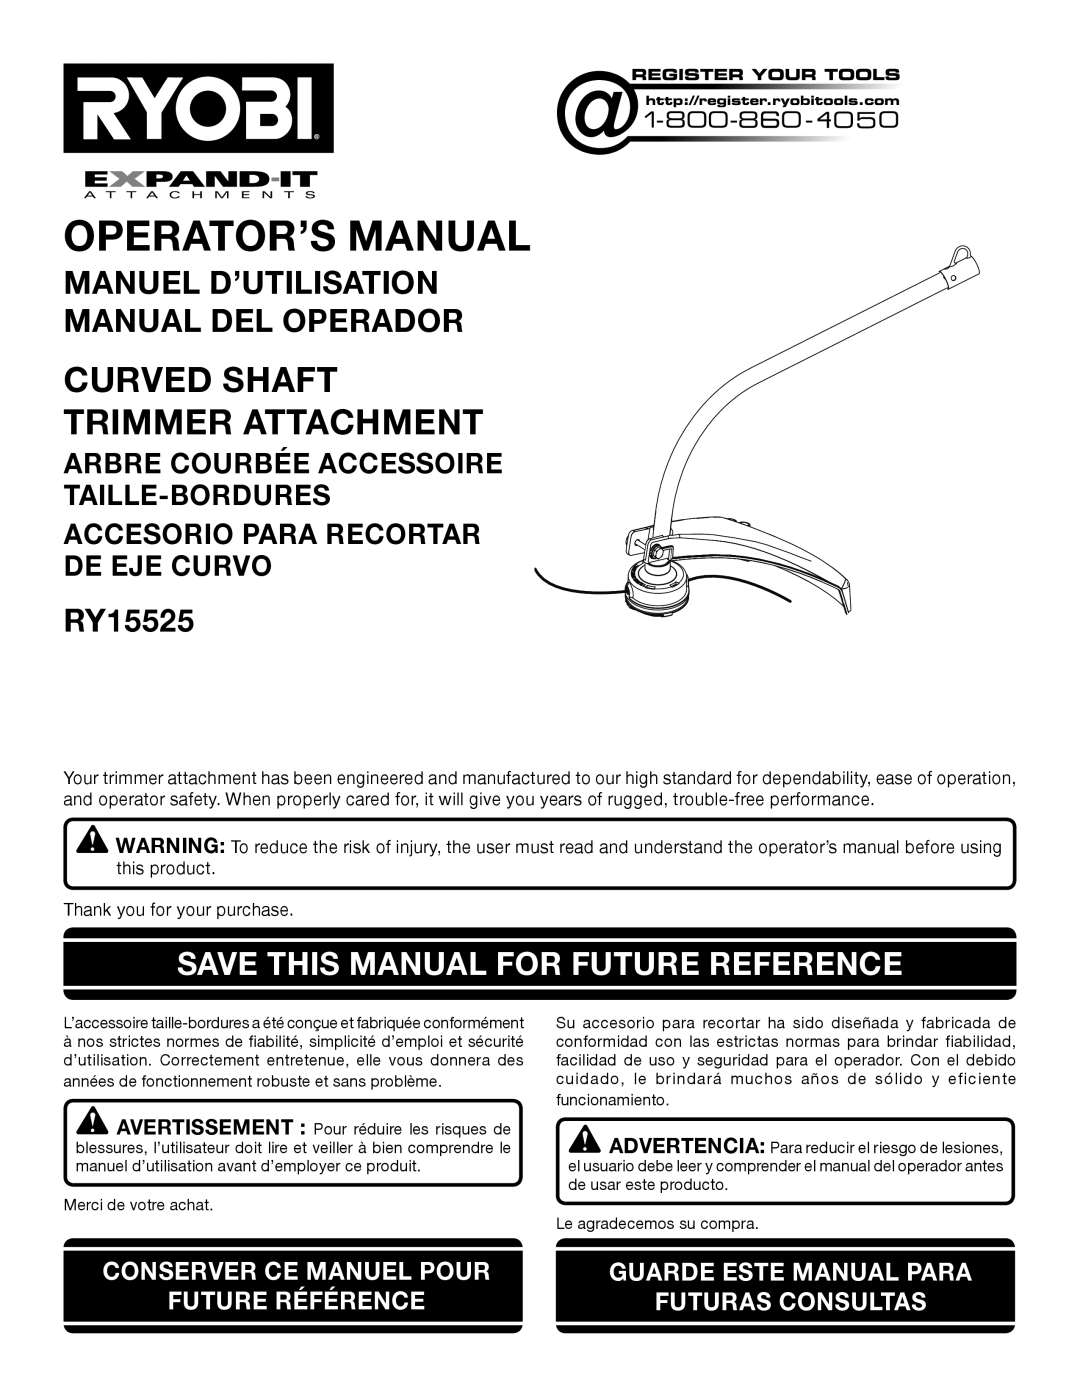 Ryobi RY15525 manuel dutilisation Curved Shaft Trimmer Attachment, Manuel D’Utilisation Manual Del Operador, De Eje Curvo 